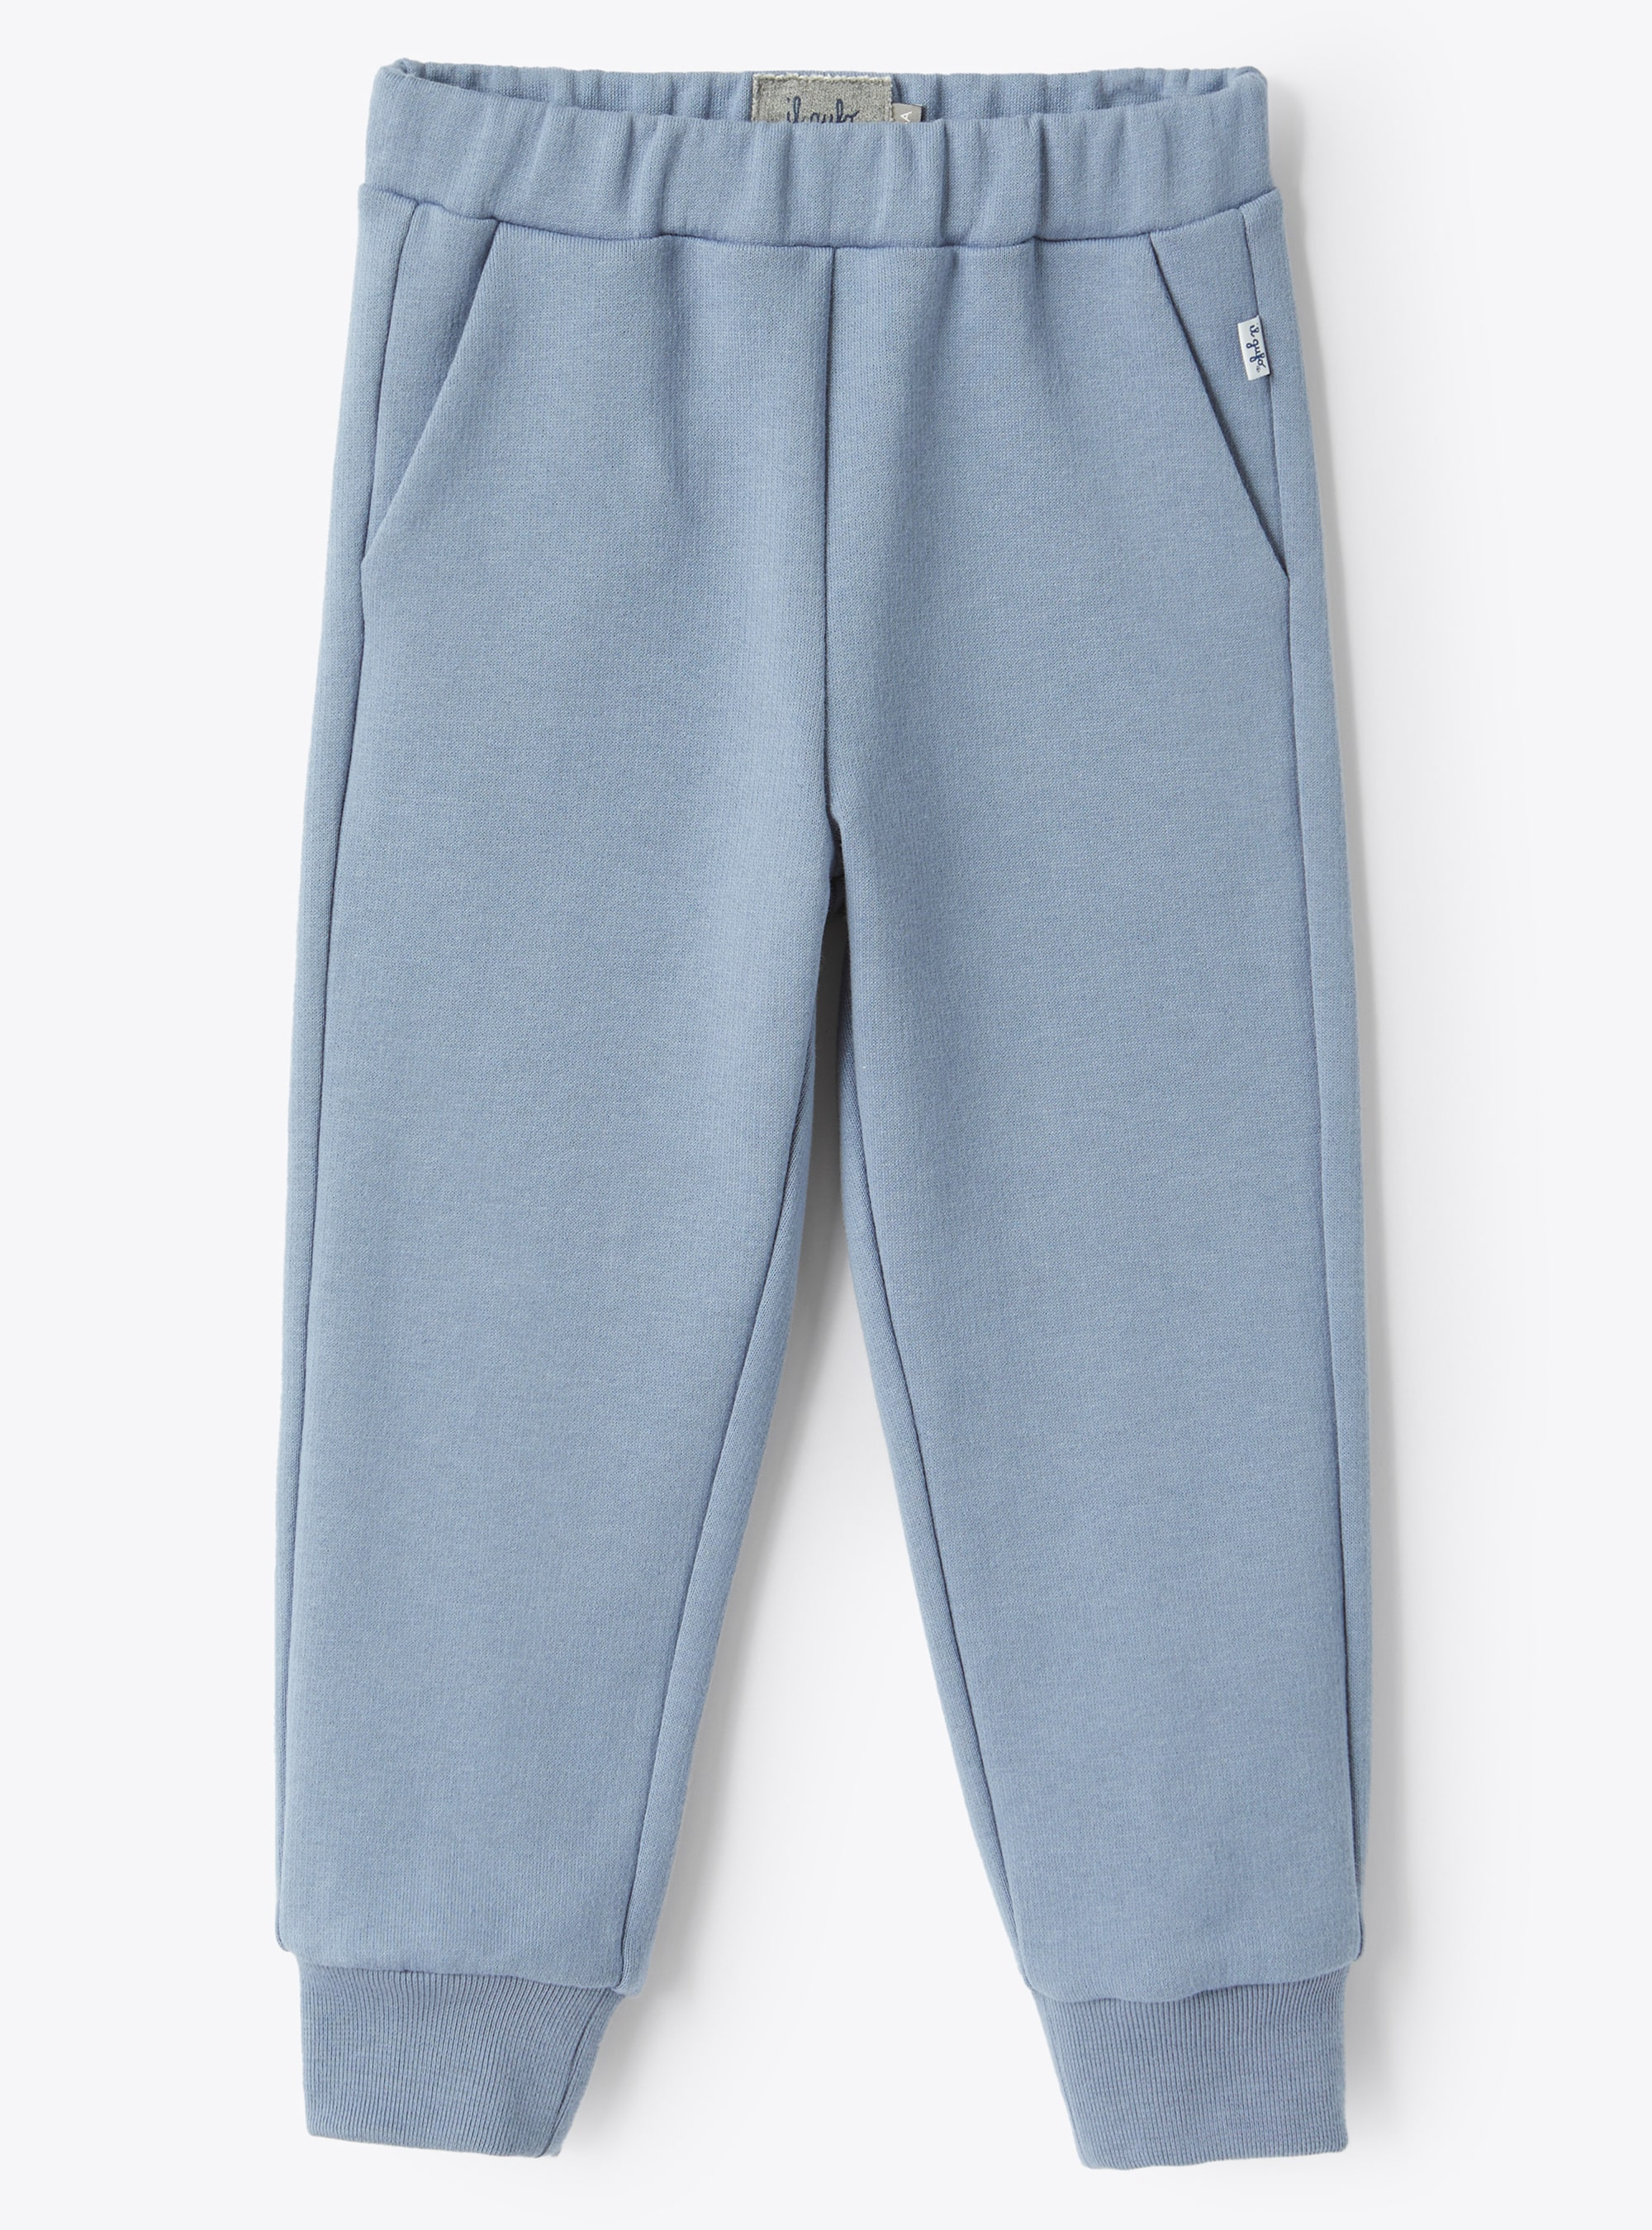 Pantalon de jogging en molleton de coton bleu ciel - Pantalons - Il Gufo